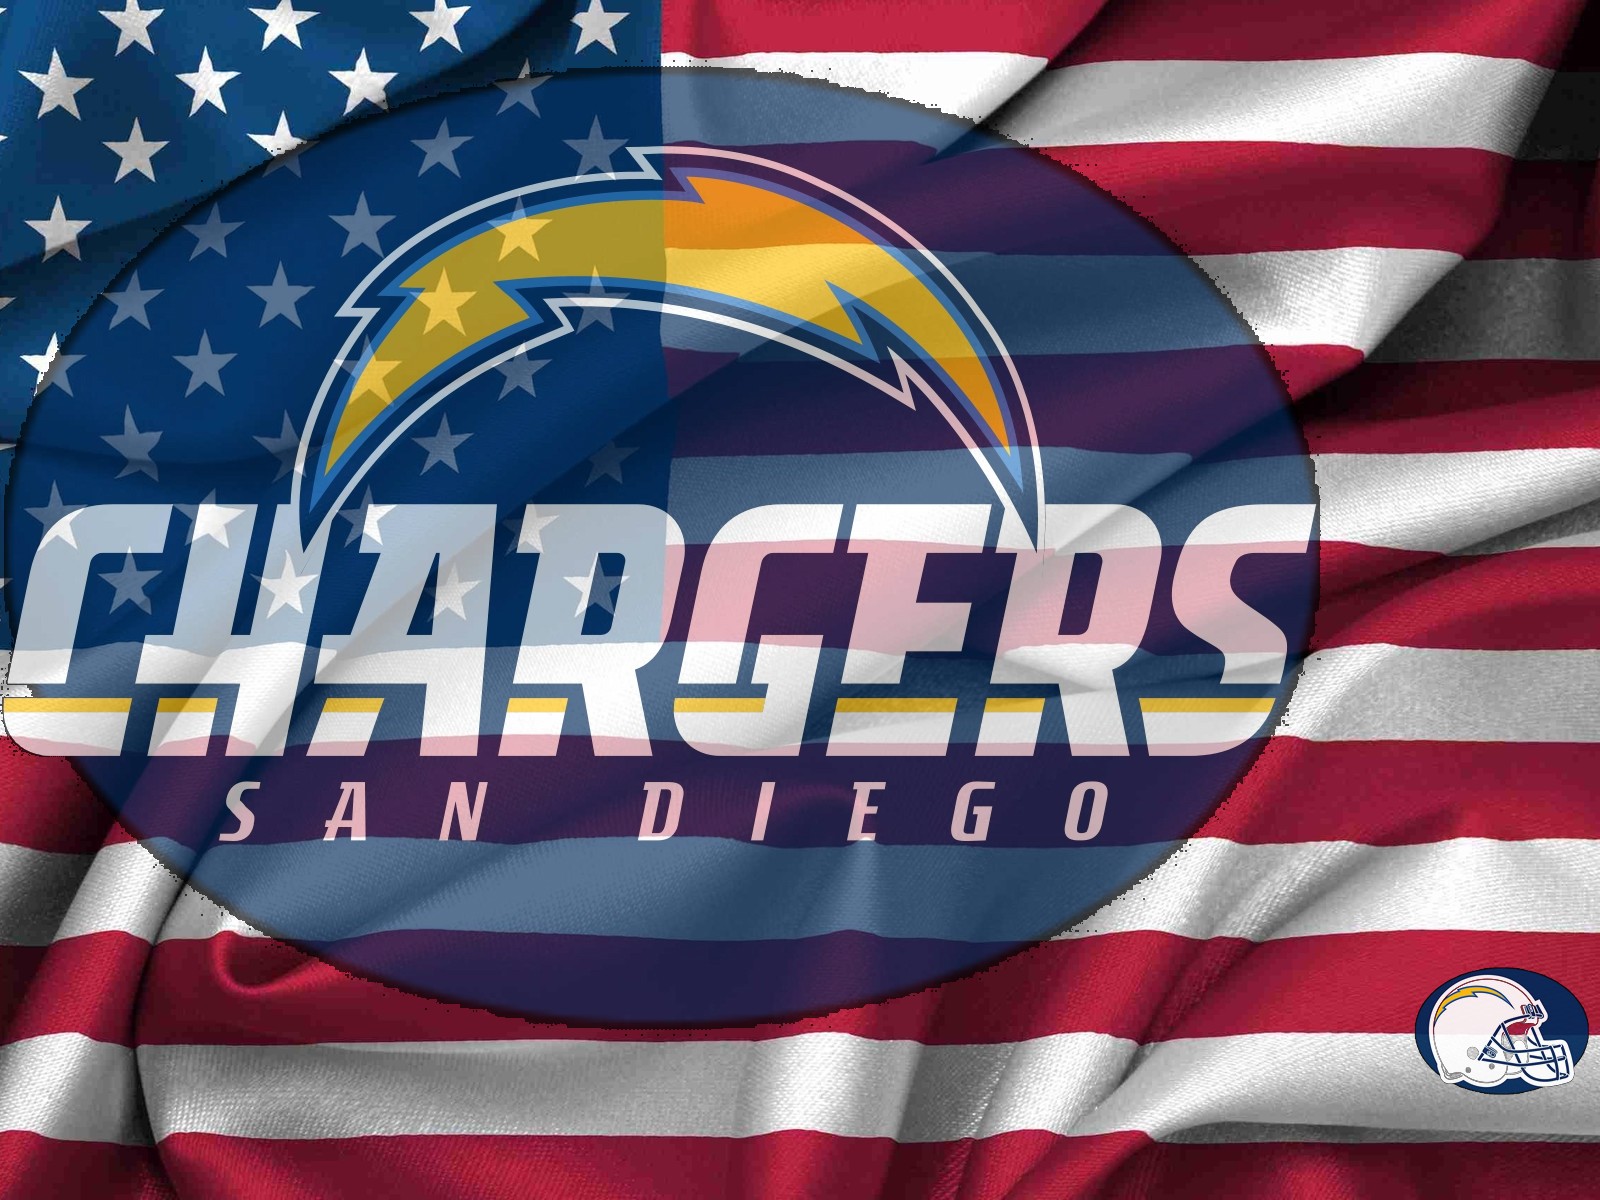 San Diego Chargers Logo USA Flag Wavy Canvas 1600x1200 DESKTOP NFL